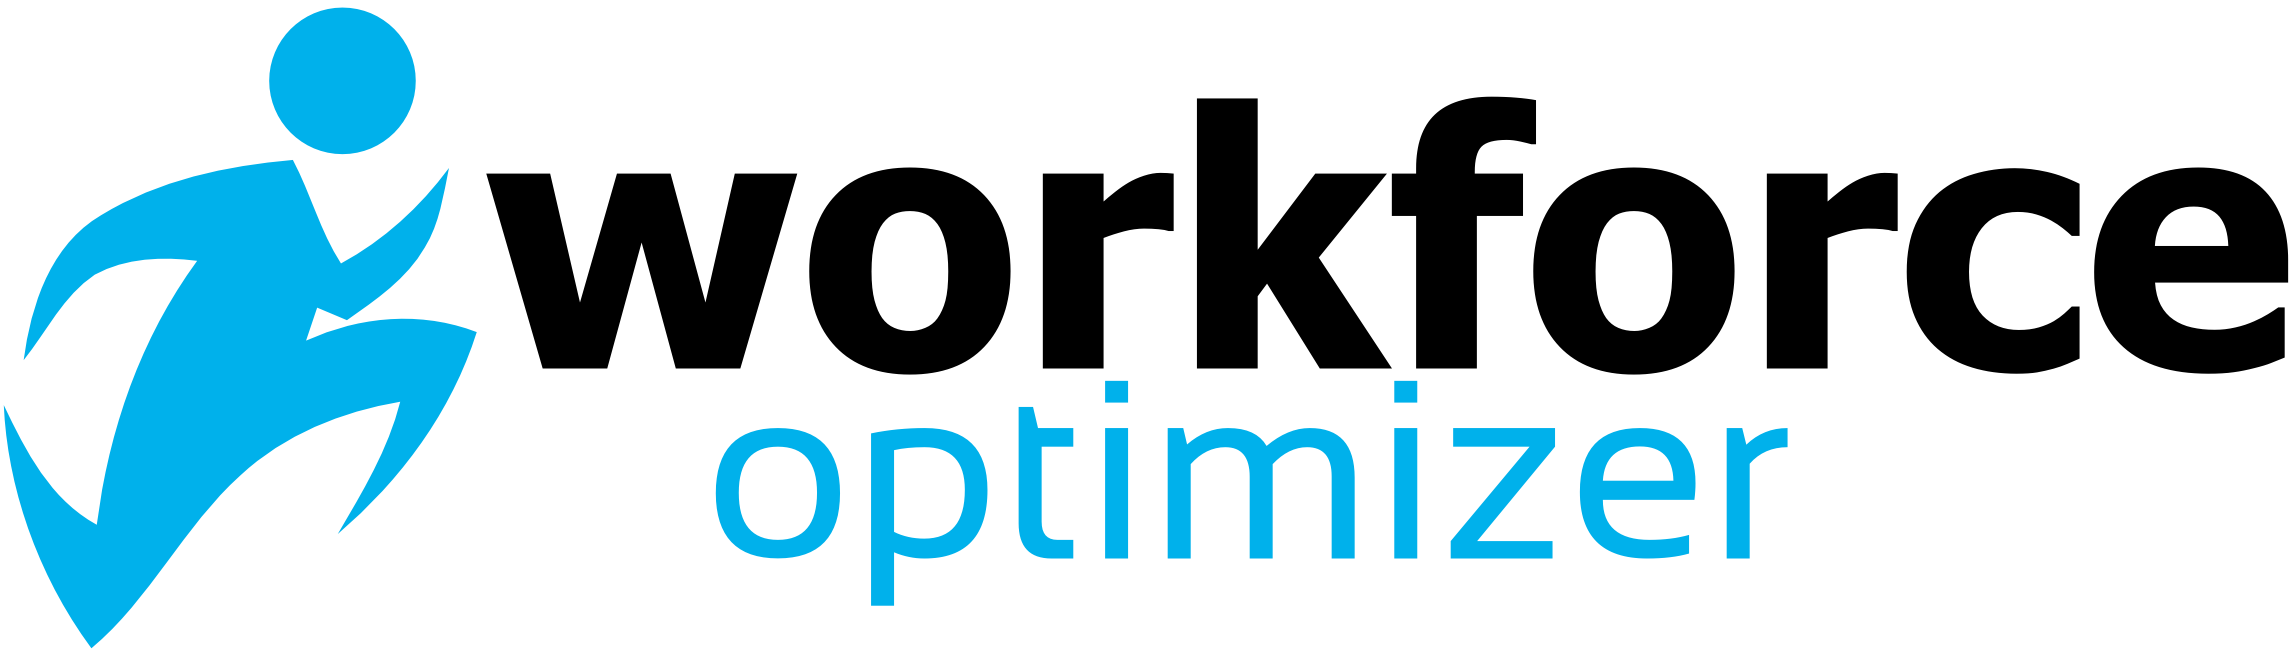 Company logo for Workforce Optimizer Pte. Ltd.